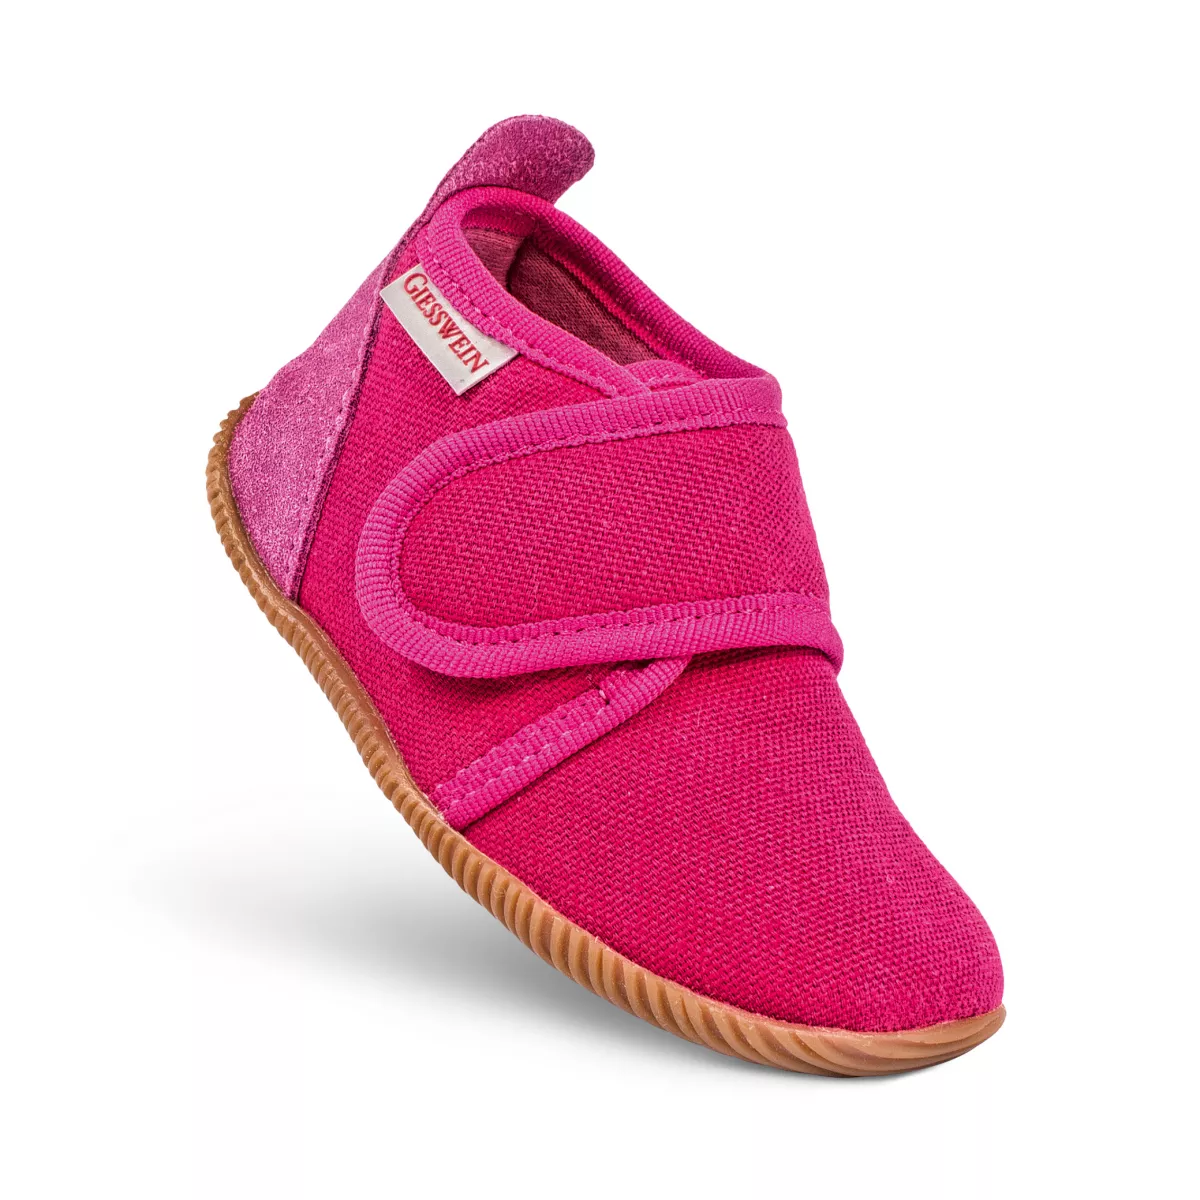 Papuci de casa pentru copii, model Strass, roz zmeura 20